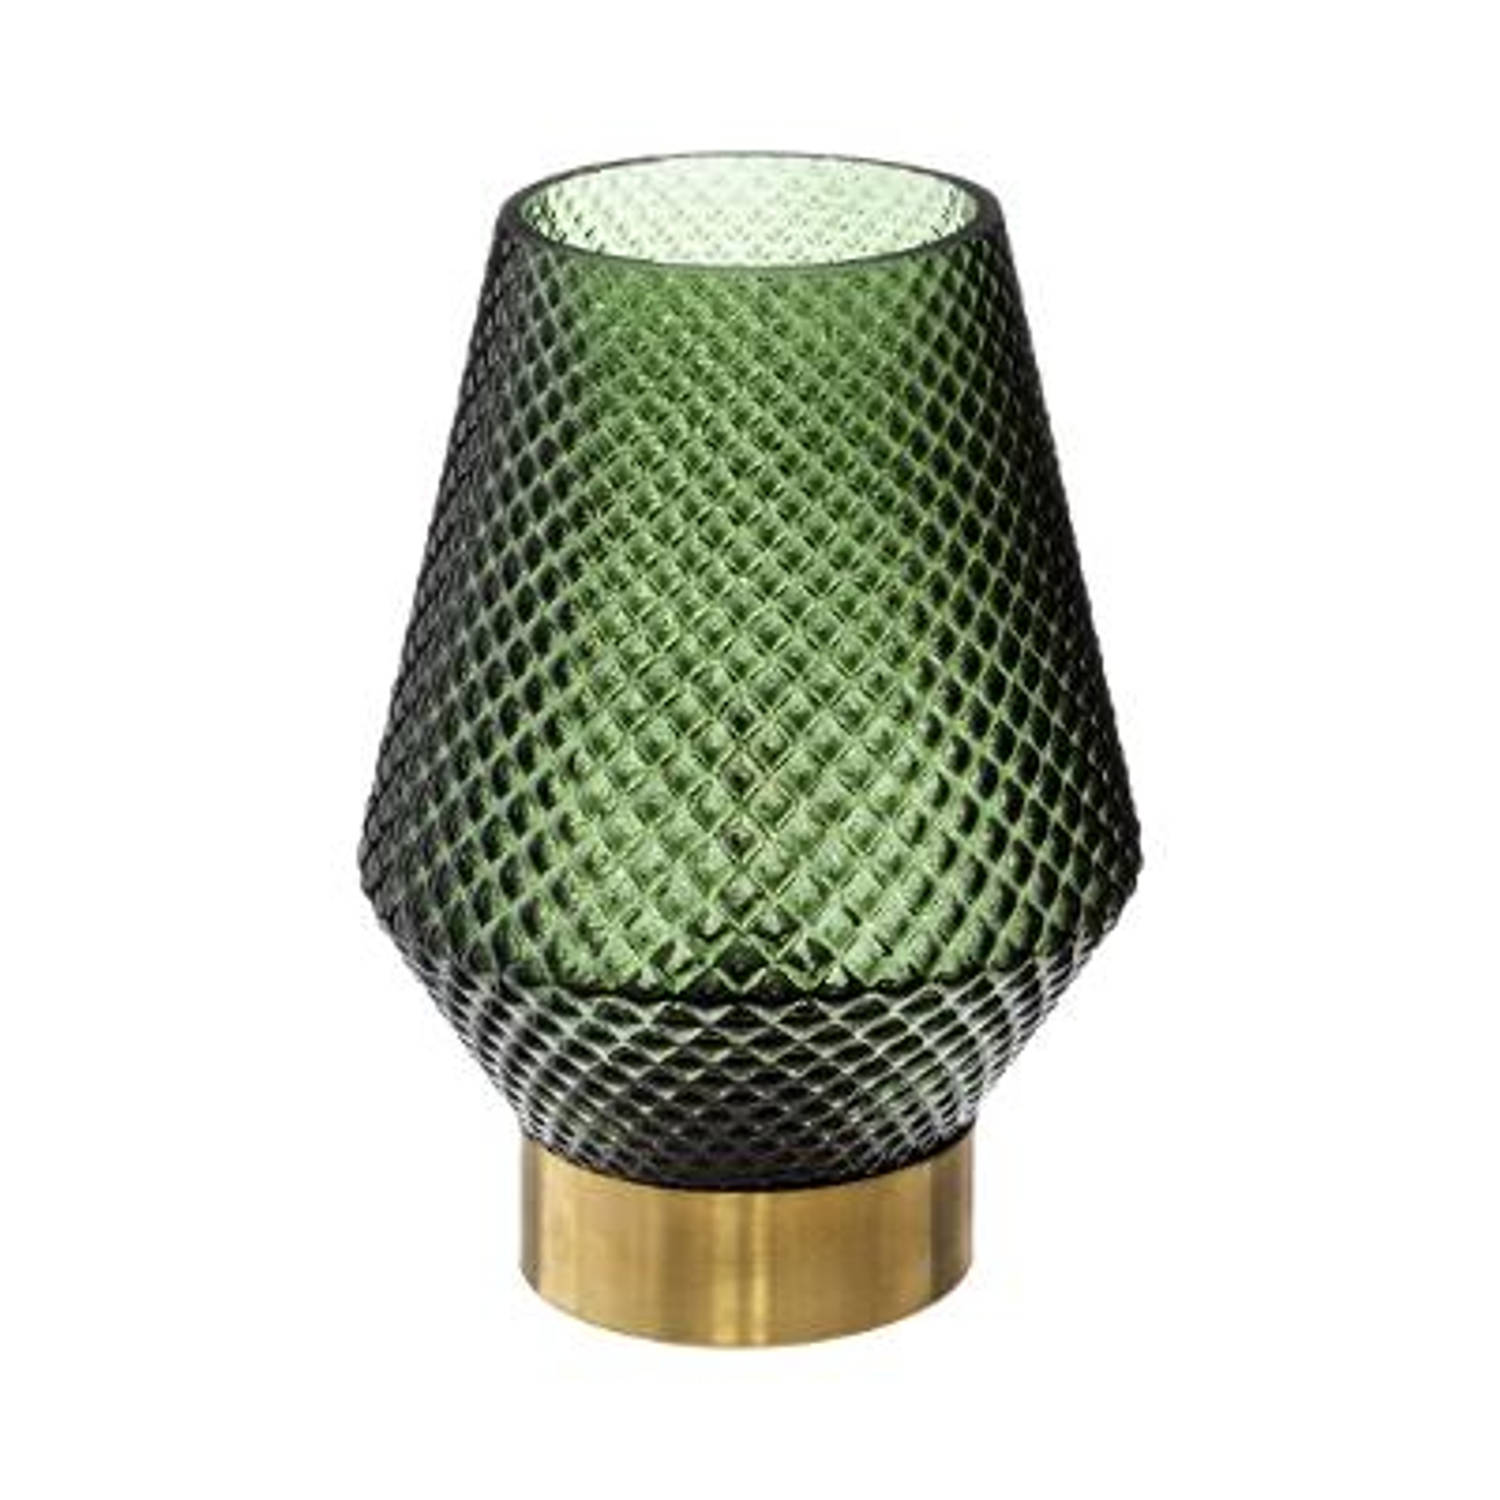 LED-lamp Green - Groen - Goud - Werkt op batterijen (incl. lamp) - Ø12 x17 cm